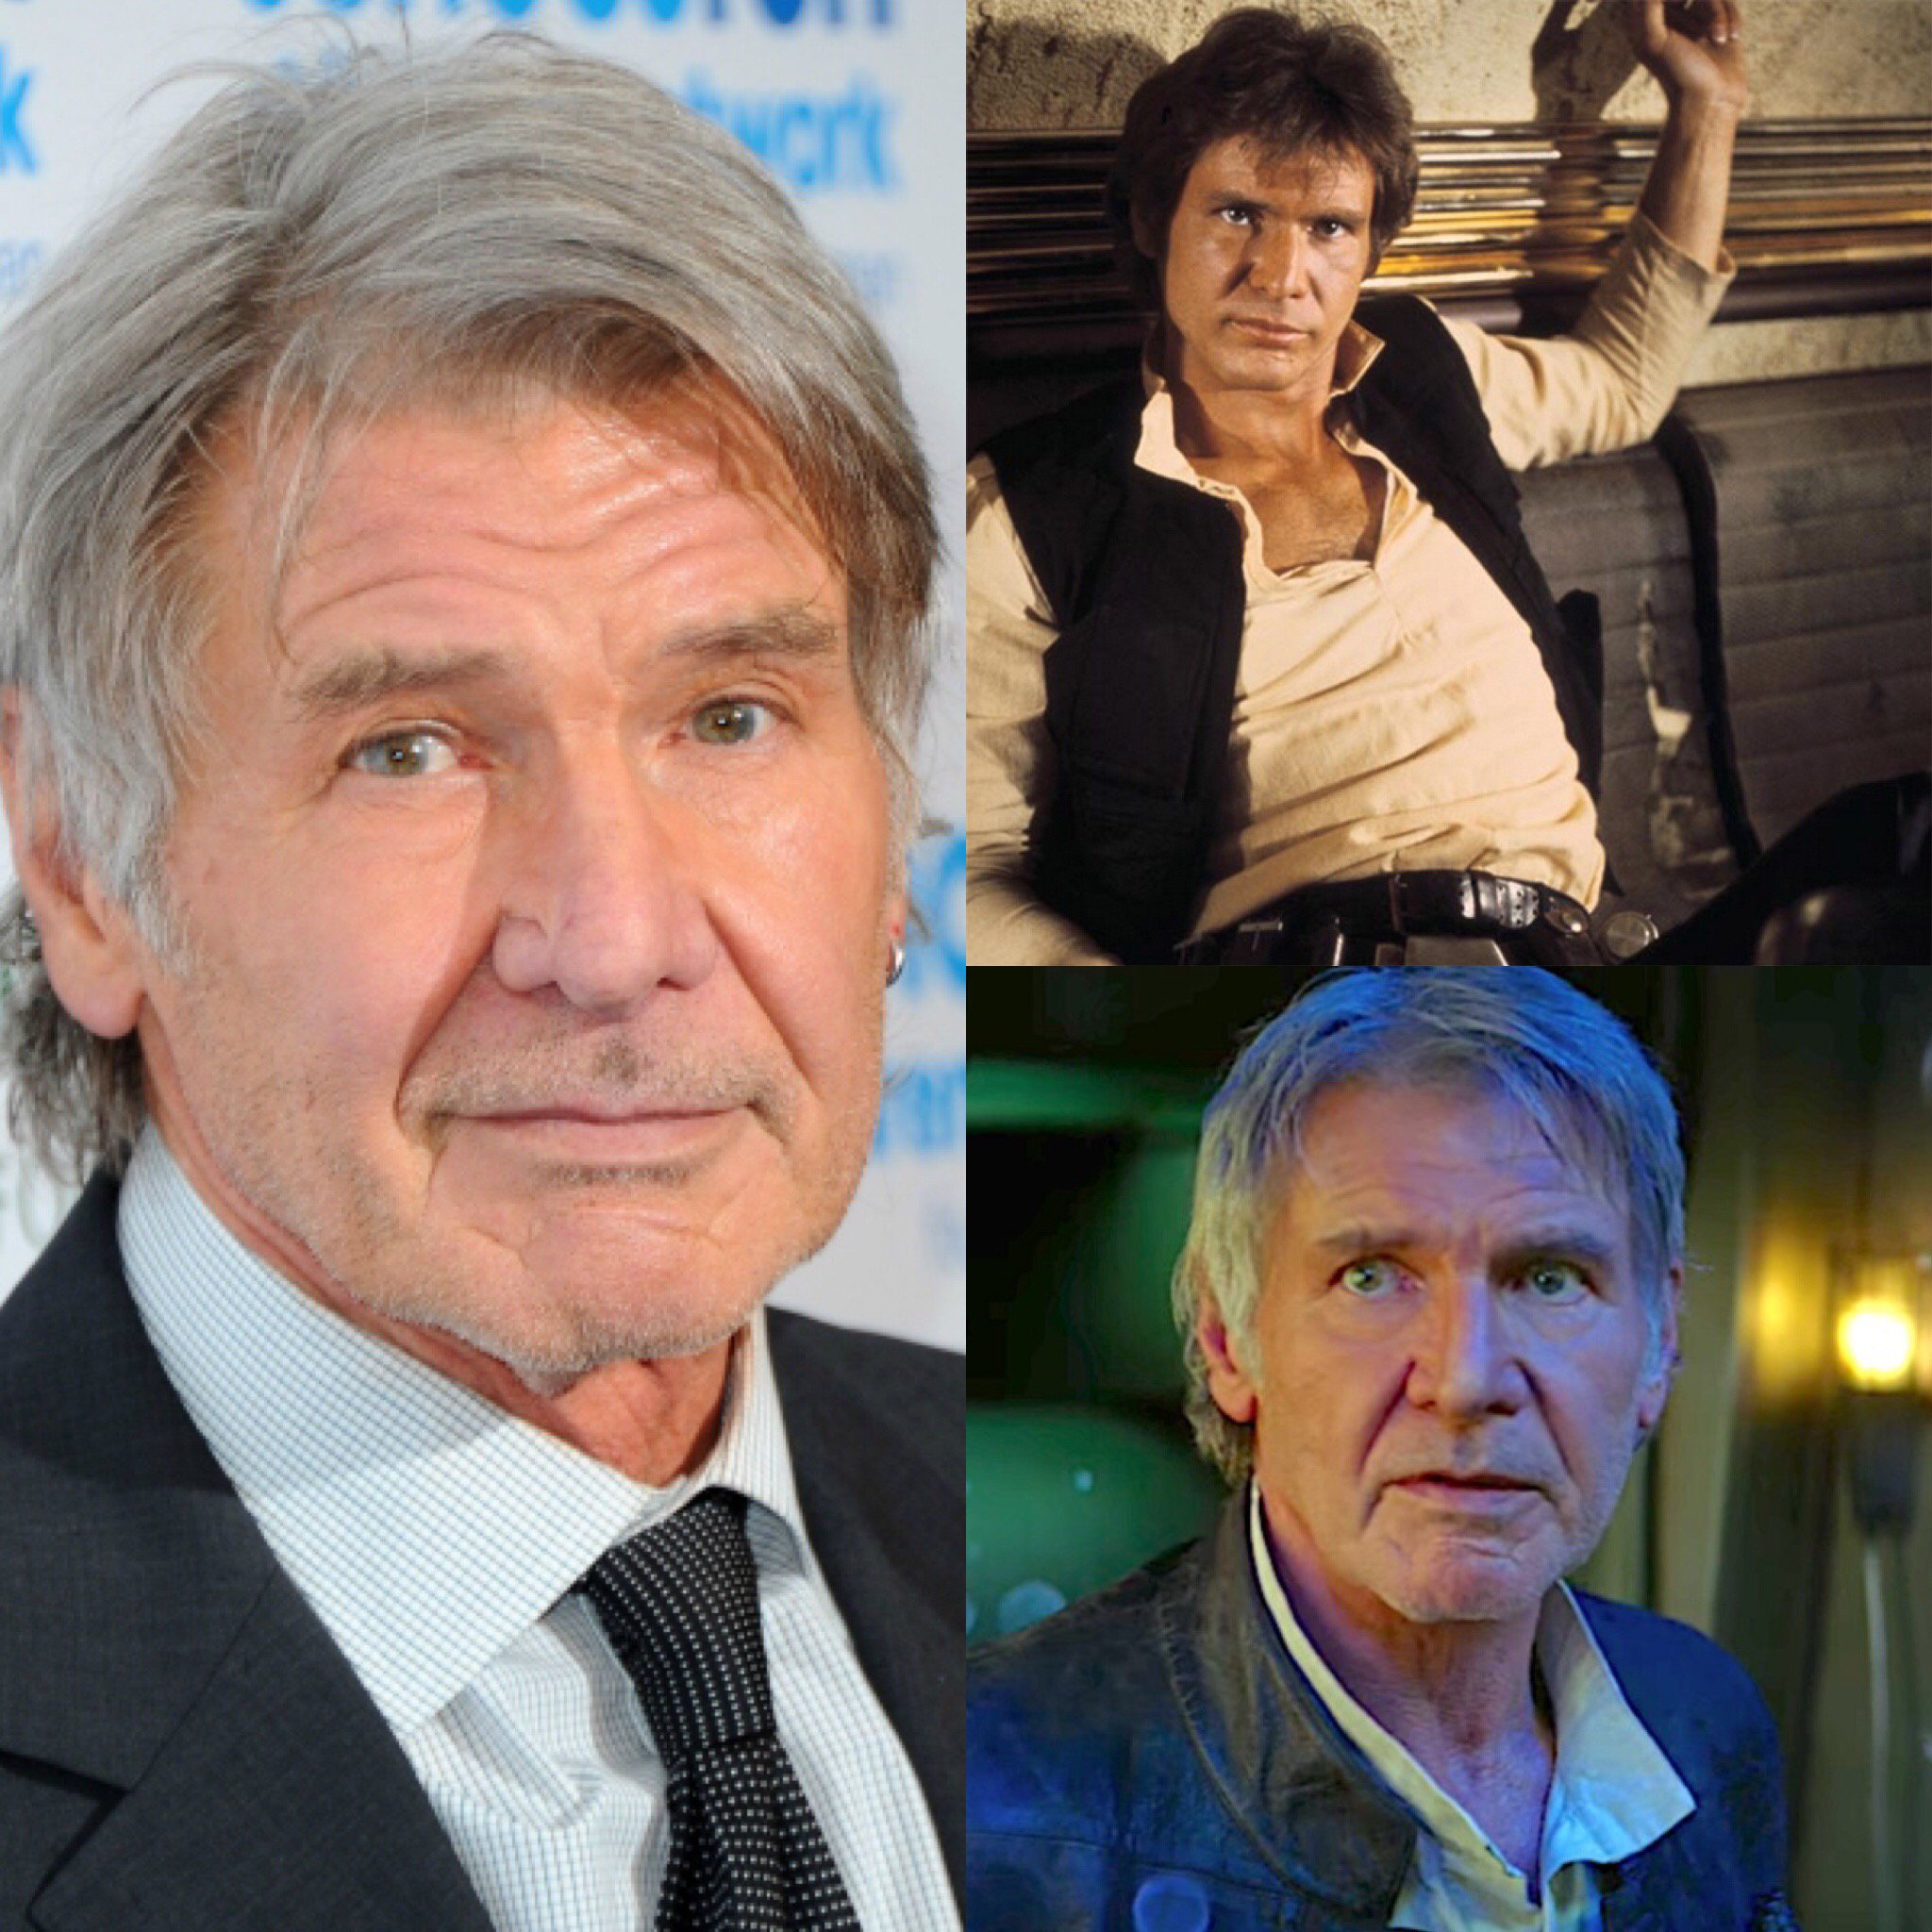 Happy birthday, Harrison Ford! 